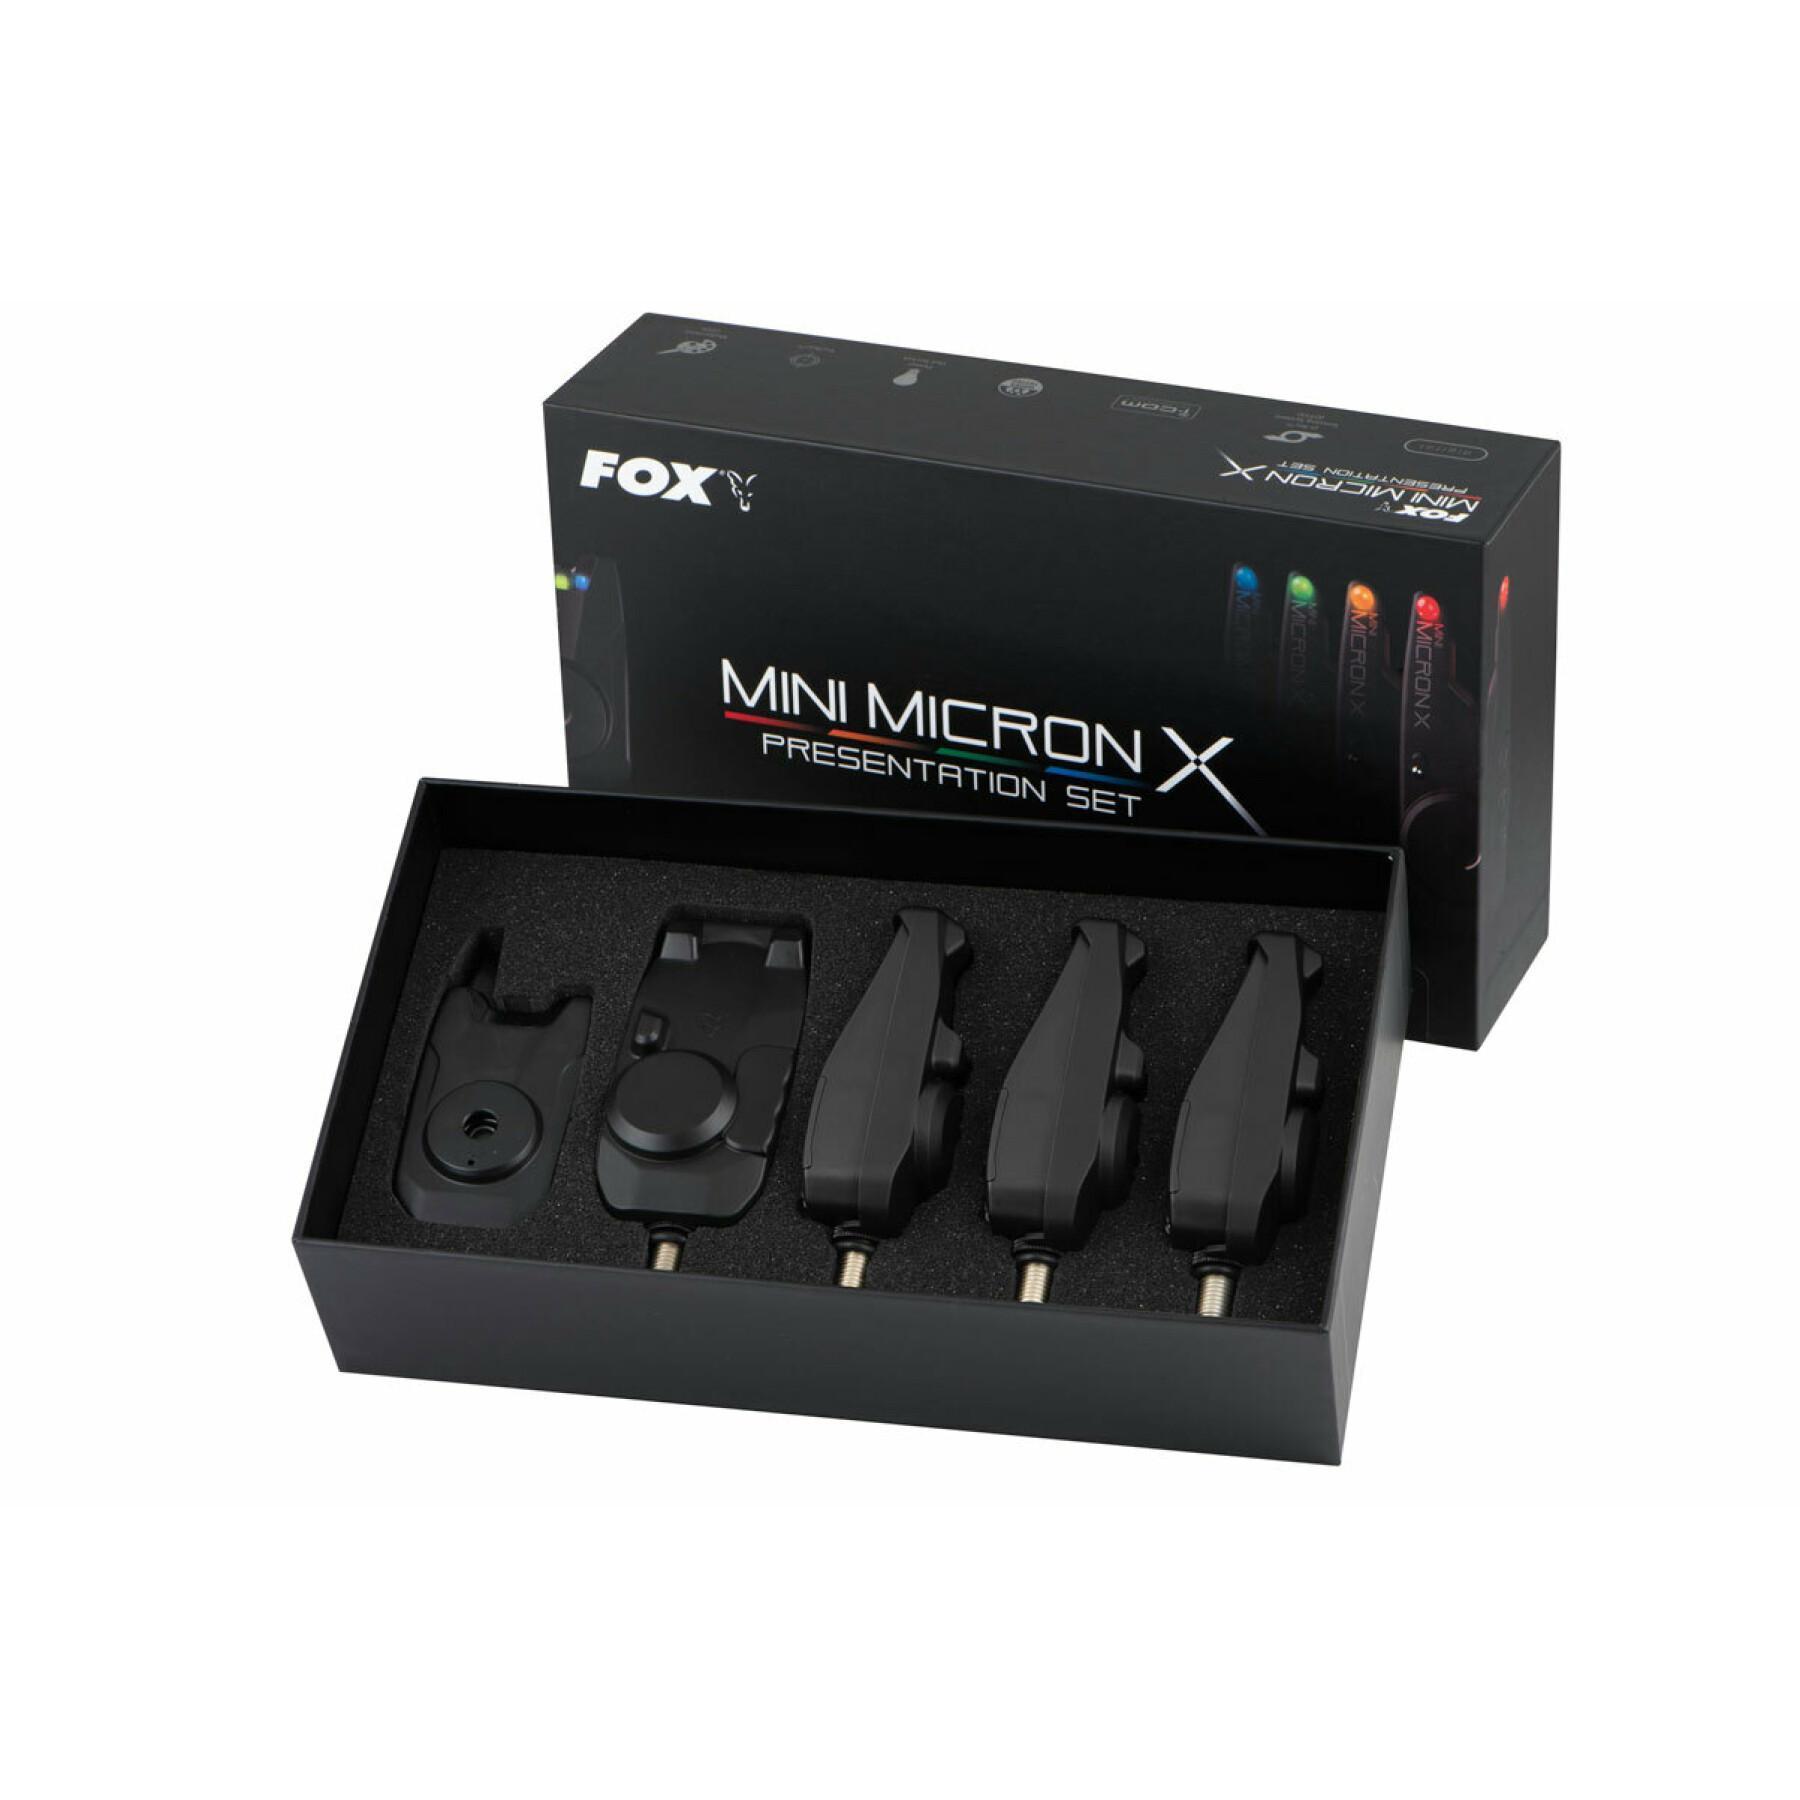 4 detectors Fox Mini micron X